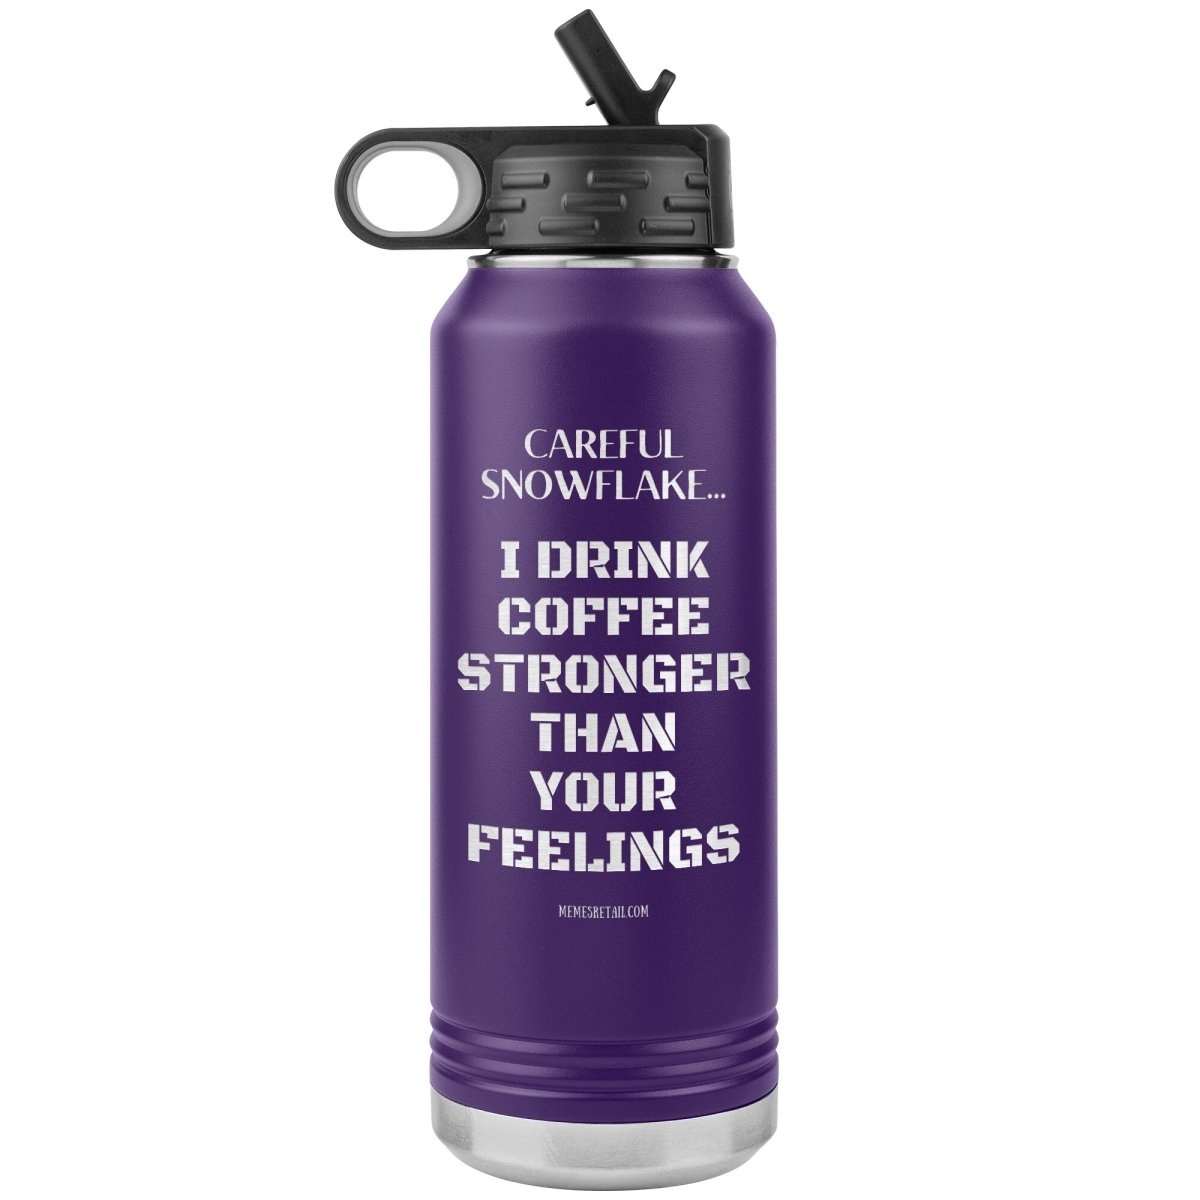 Careful Snowflake... I Drink Coffee Stronger Than Your Feelings 32 oz Water Bottle, Purple - MemesRetail.com